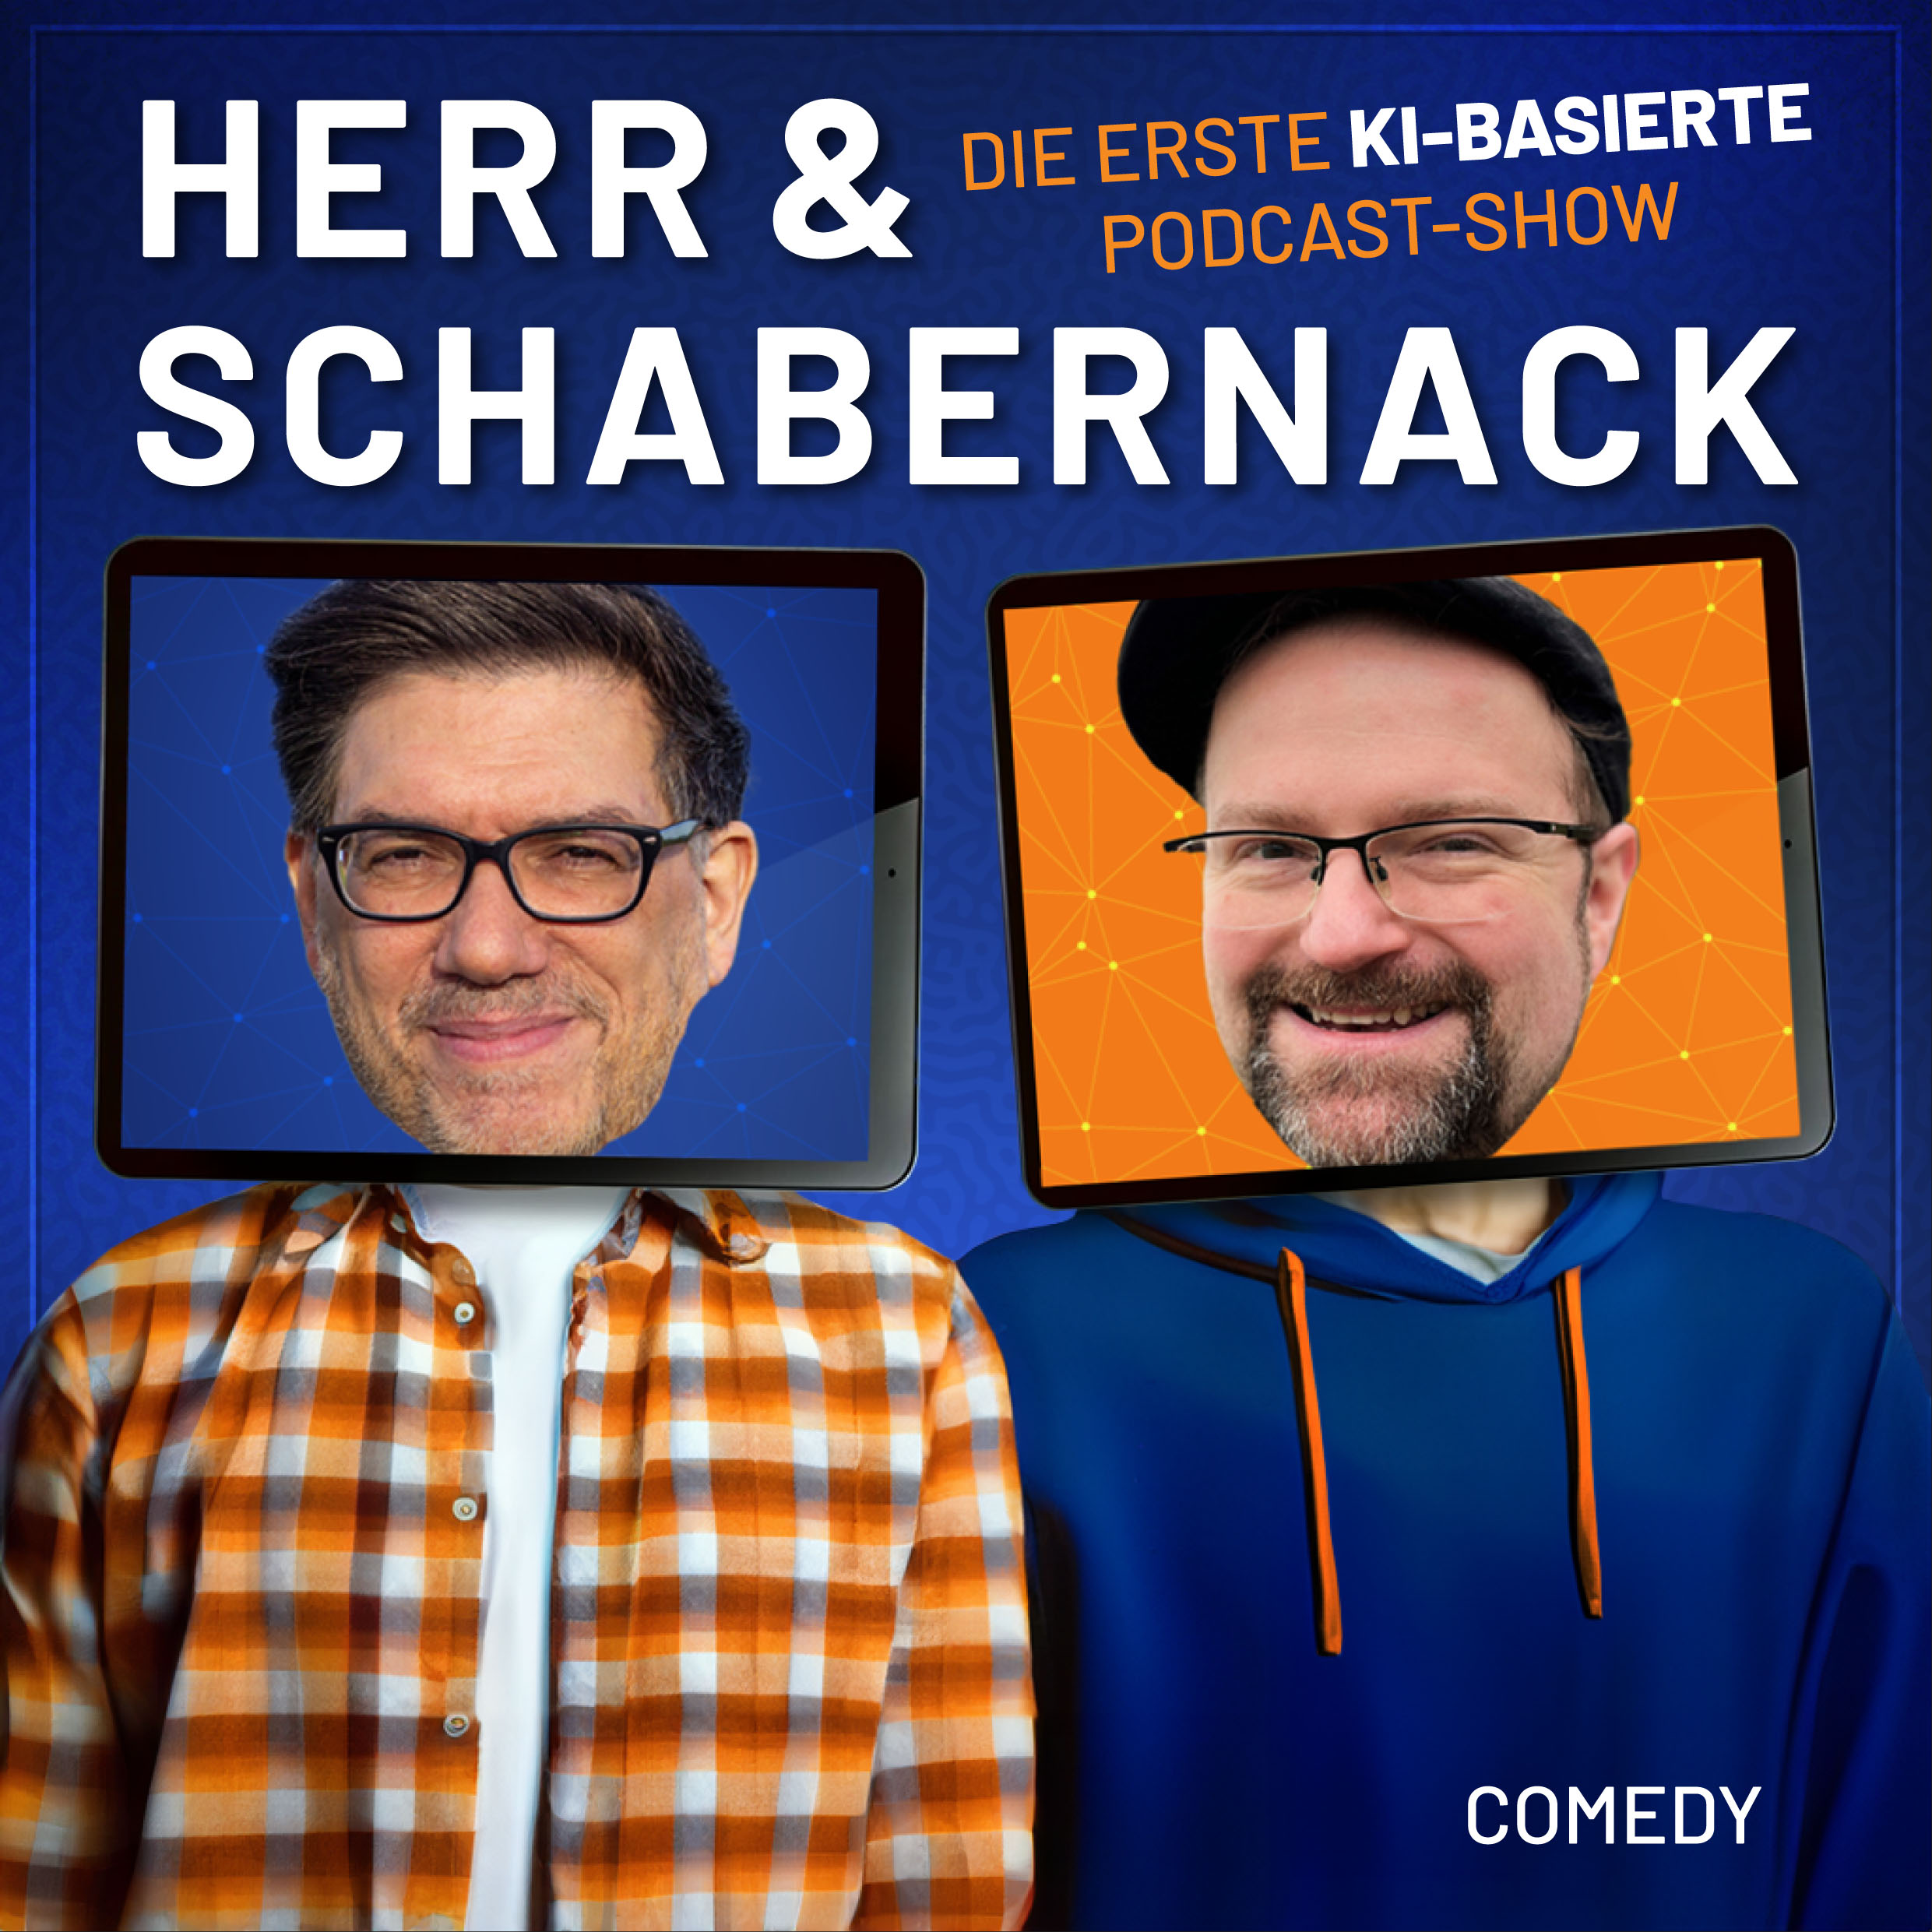 Herr & Schabernack